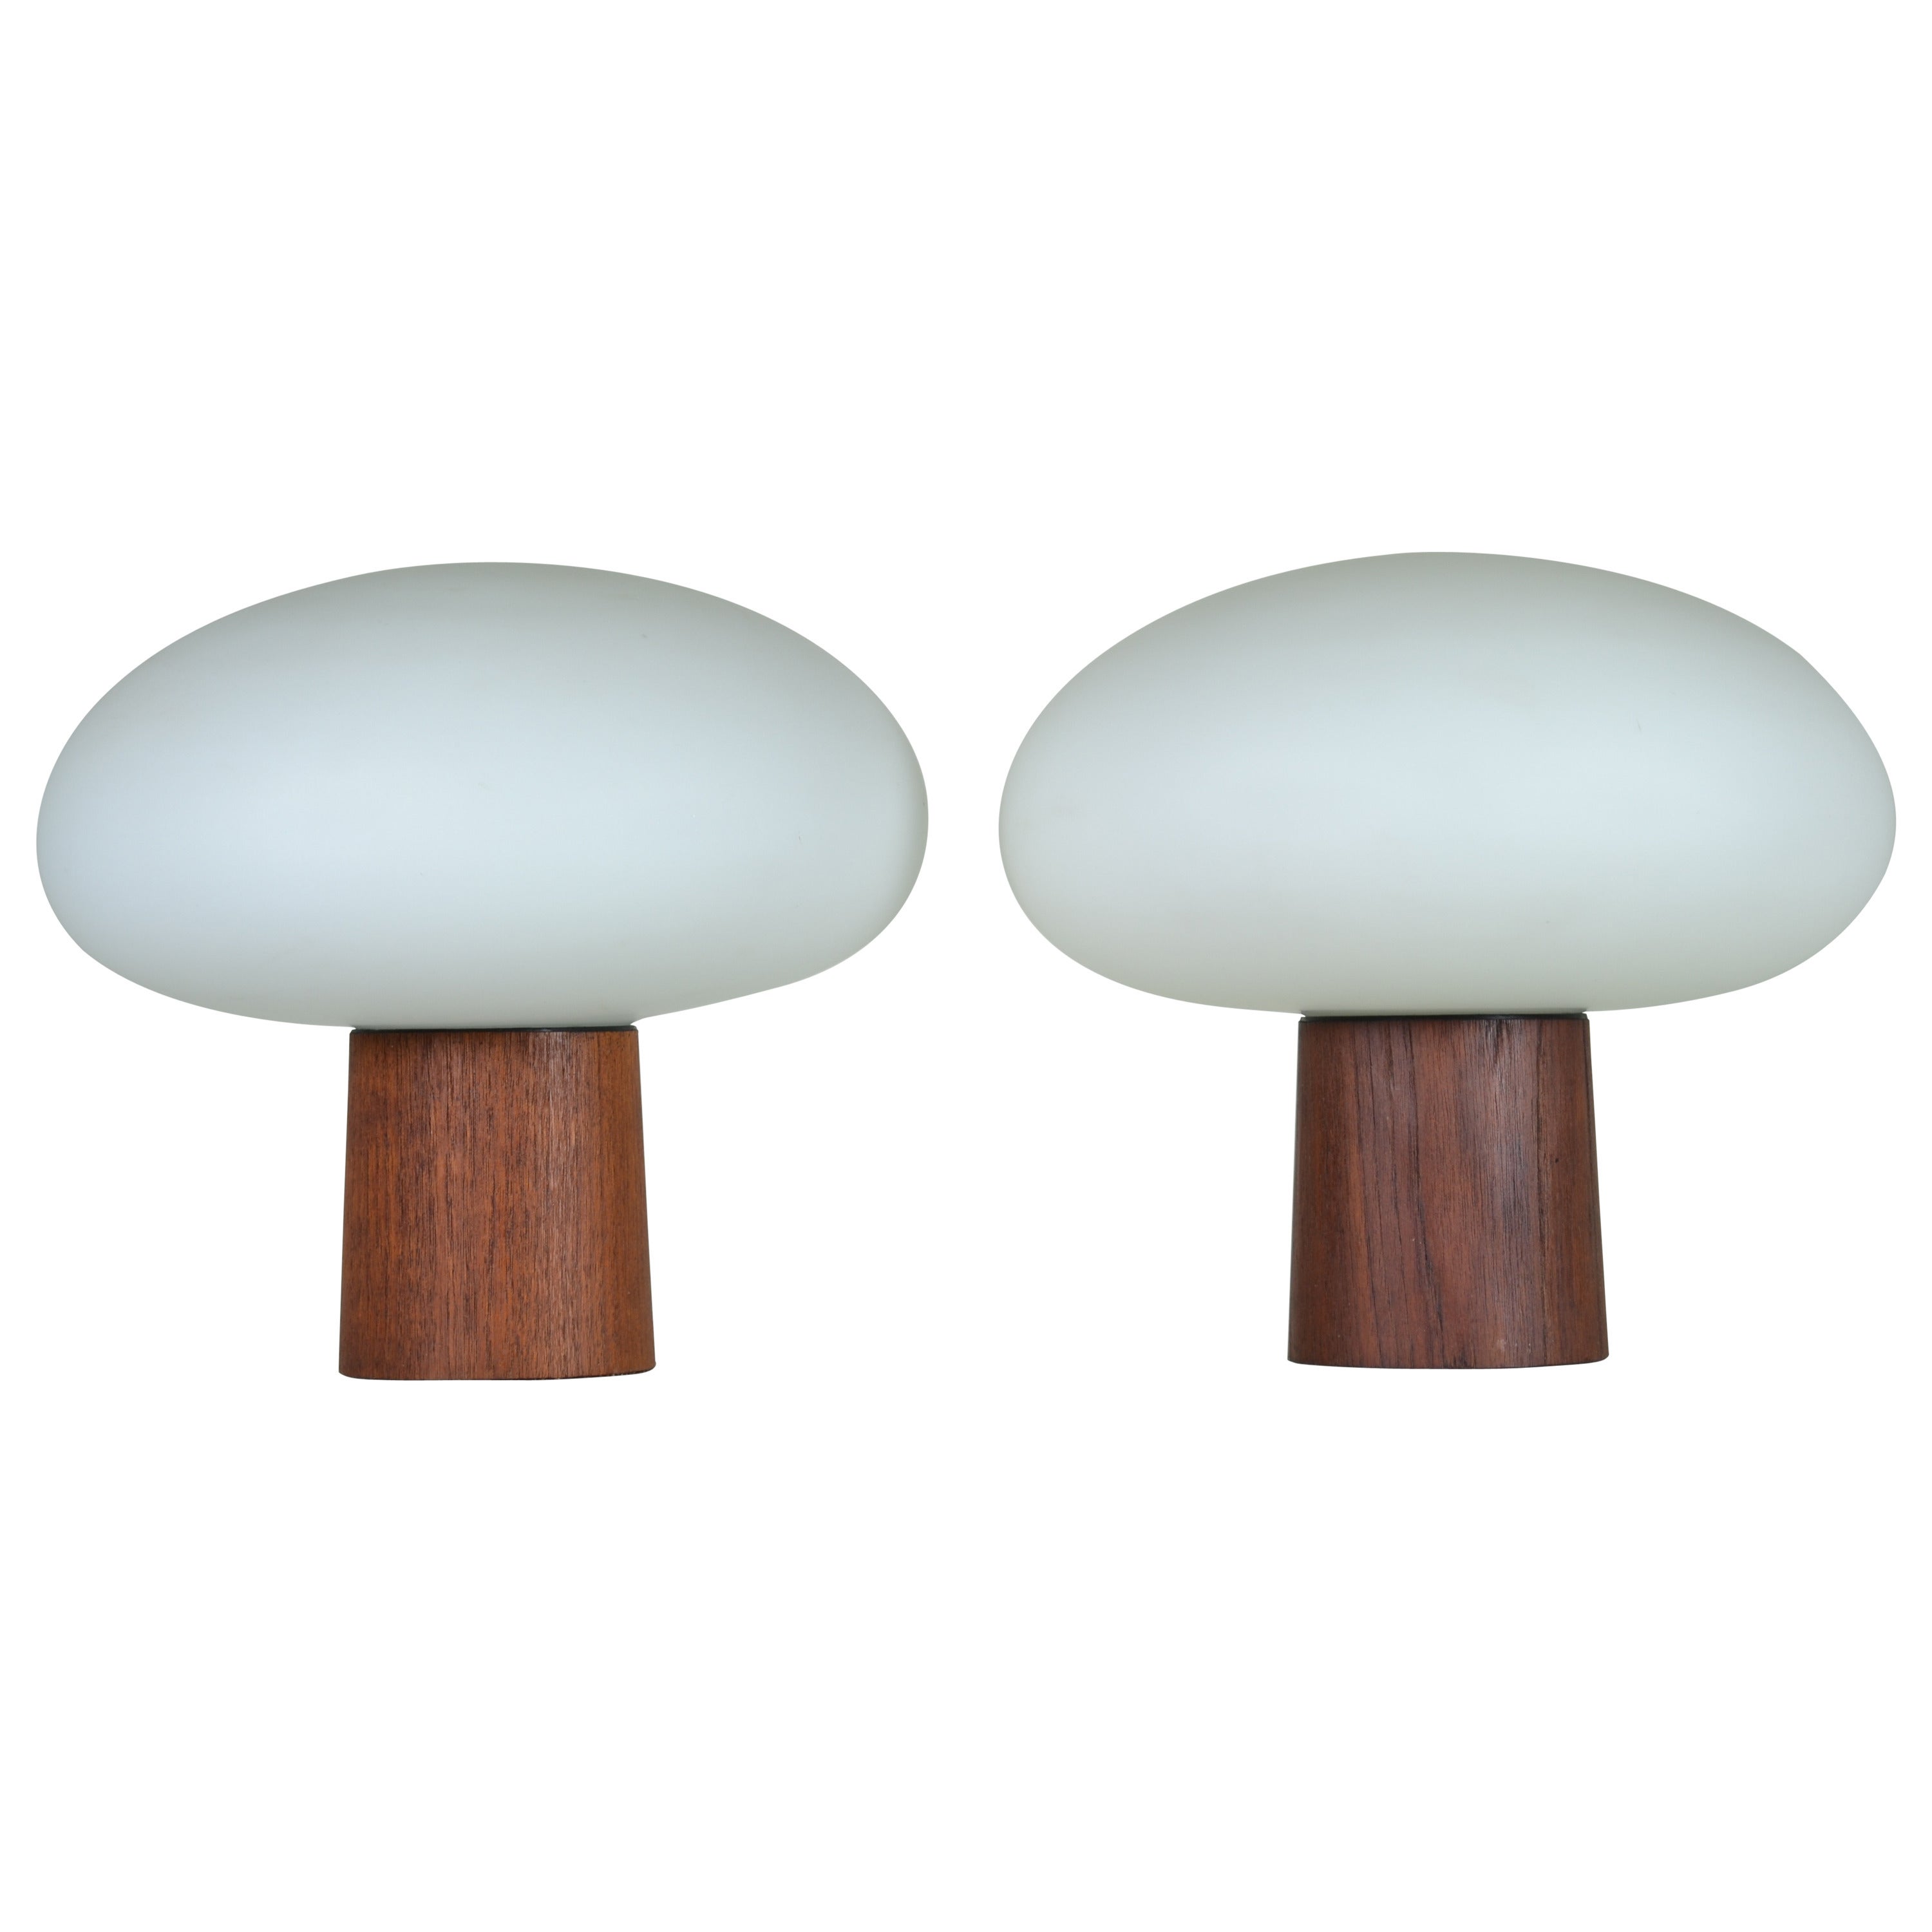 Pair of Vintage Mushroom Lamps by Laurel with Walnut Bases